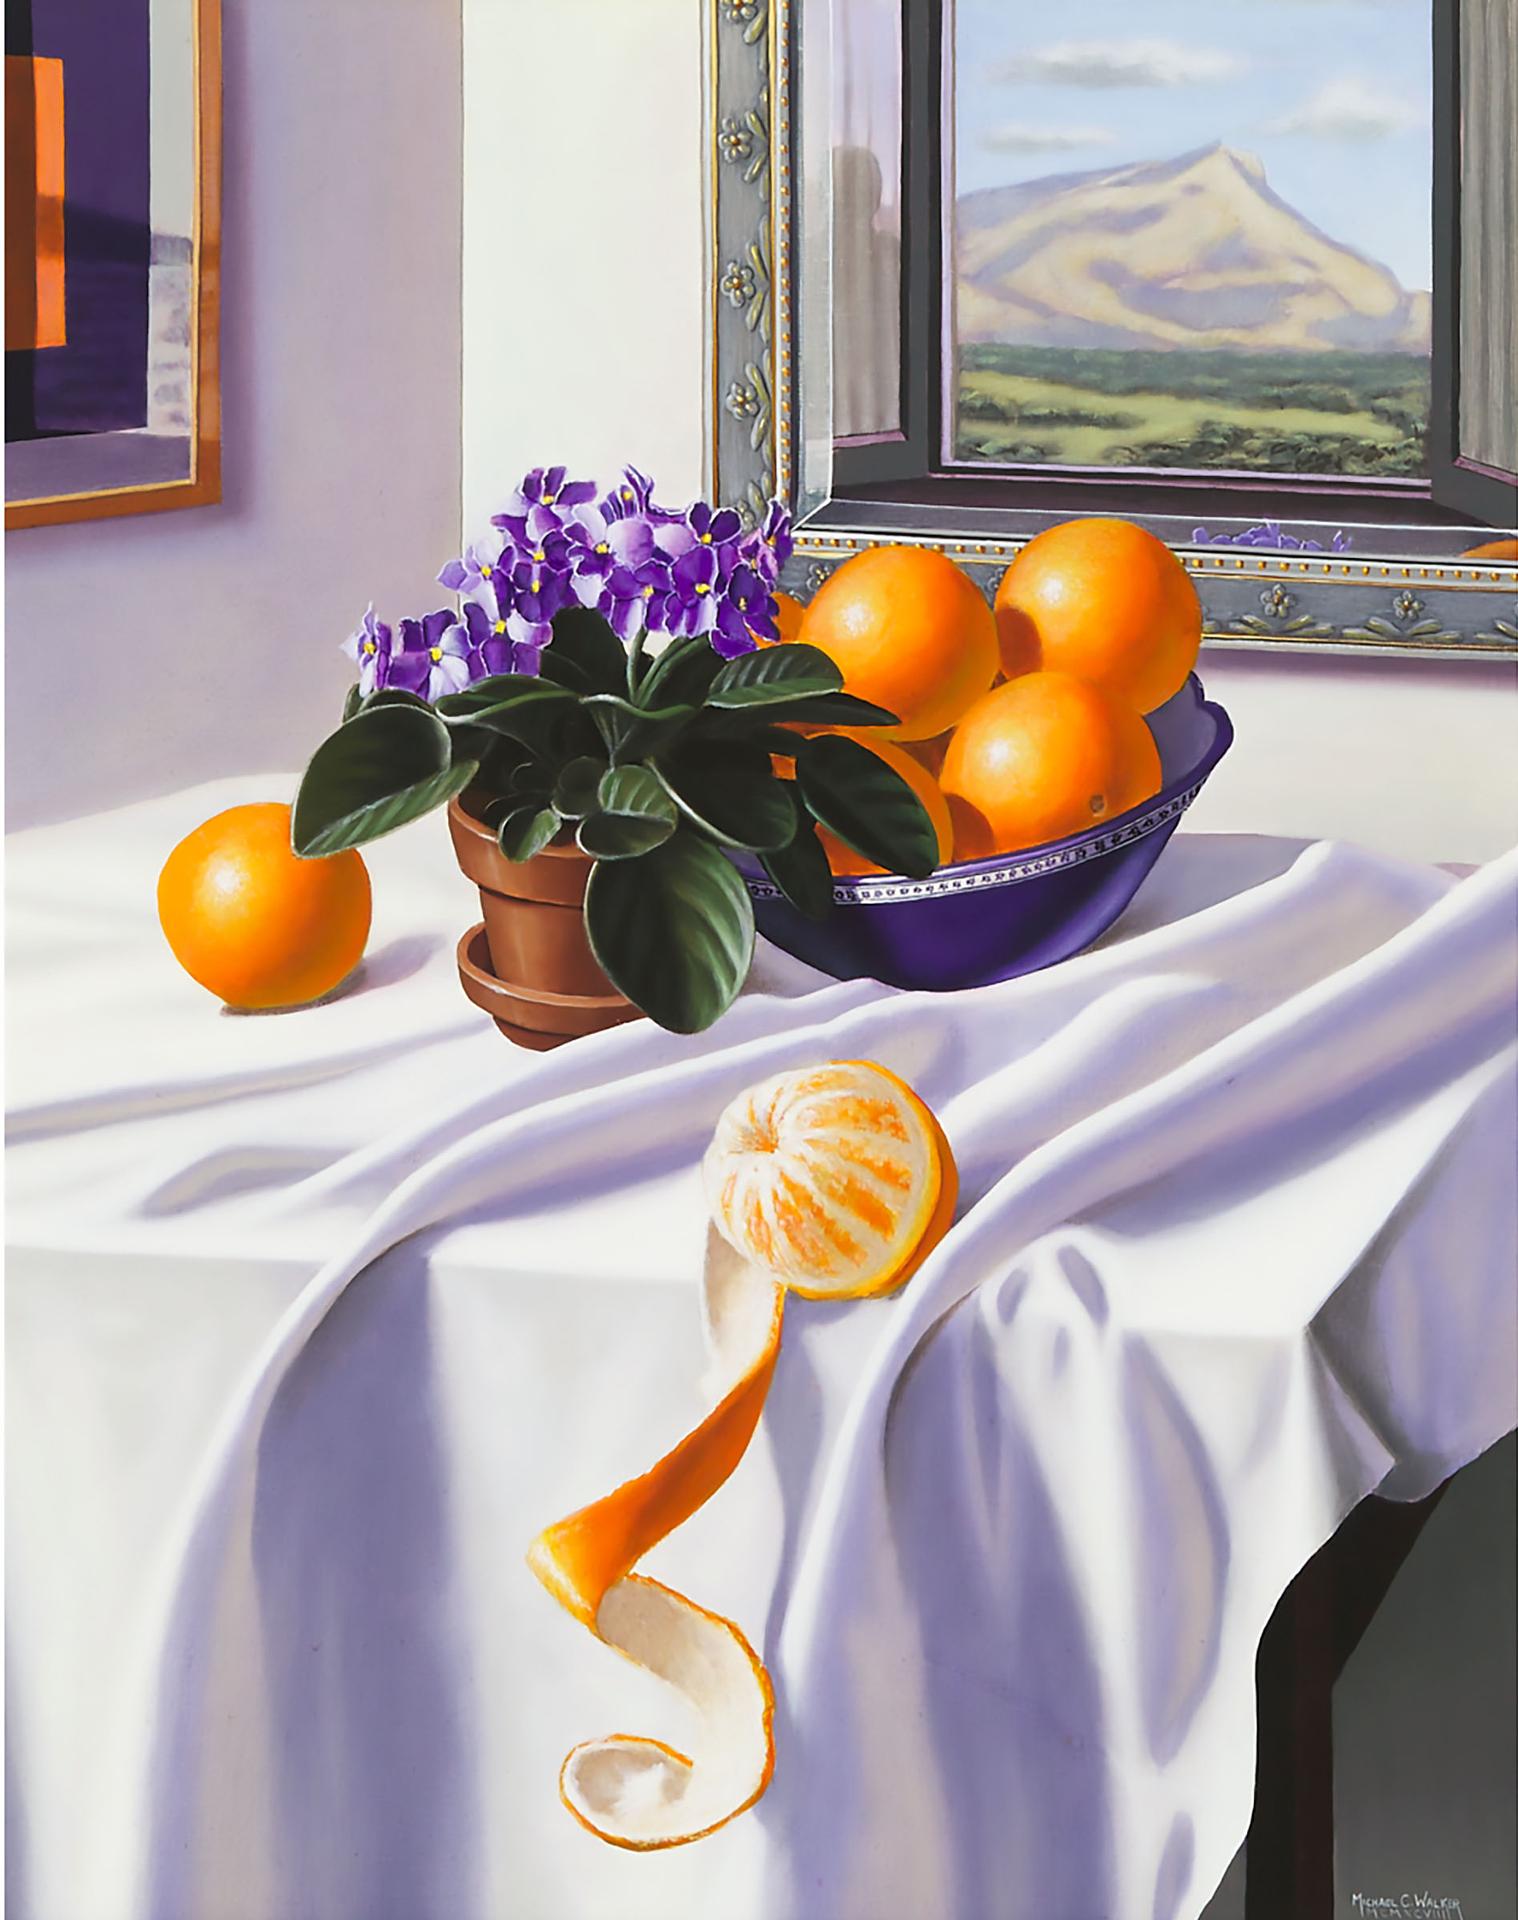 Michael C. Walker (1958) - Three Oranges, 1998